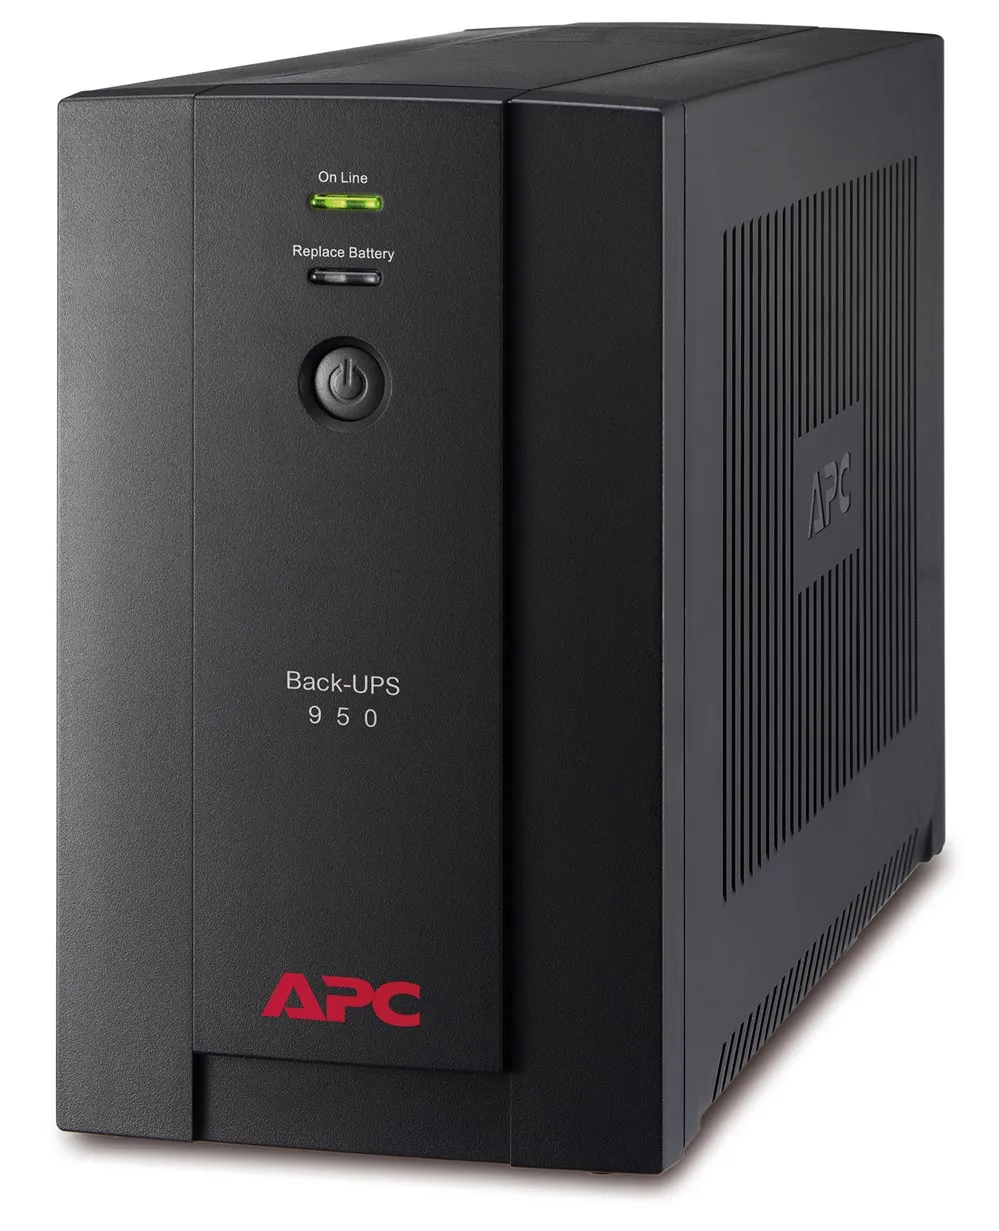 APC Back-UPS 950 VA 480 W 150 V 280 50/60 273 J | Электроника